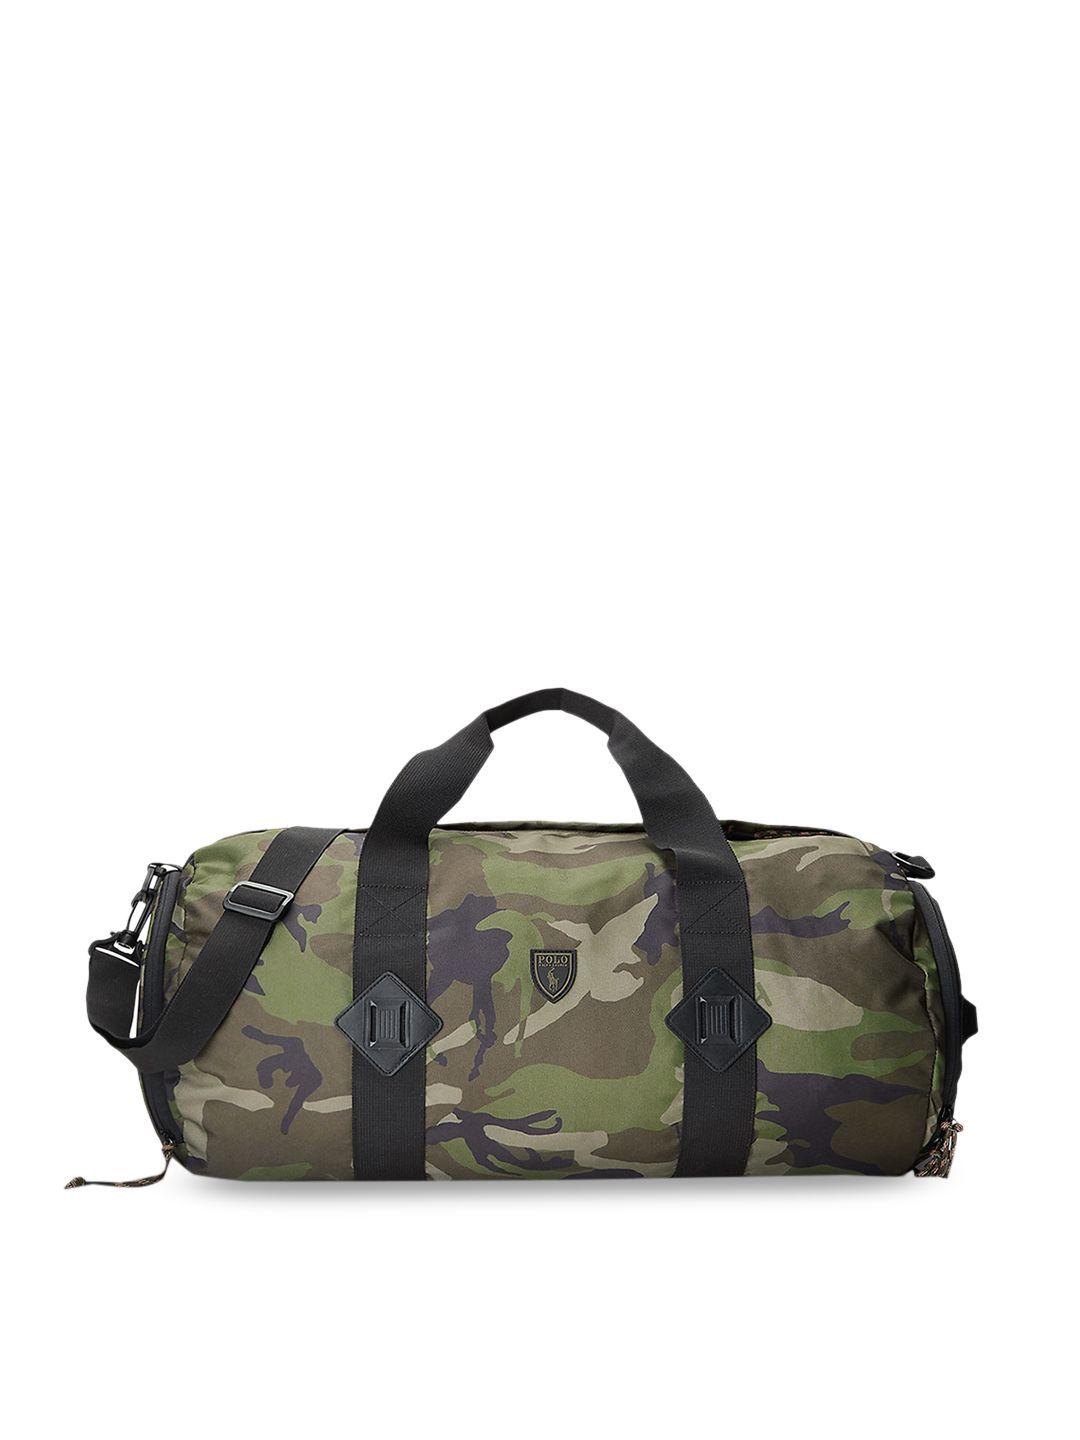 polo ralph lauren camouflage duffel bag